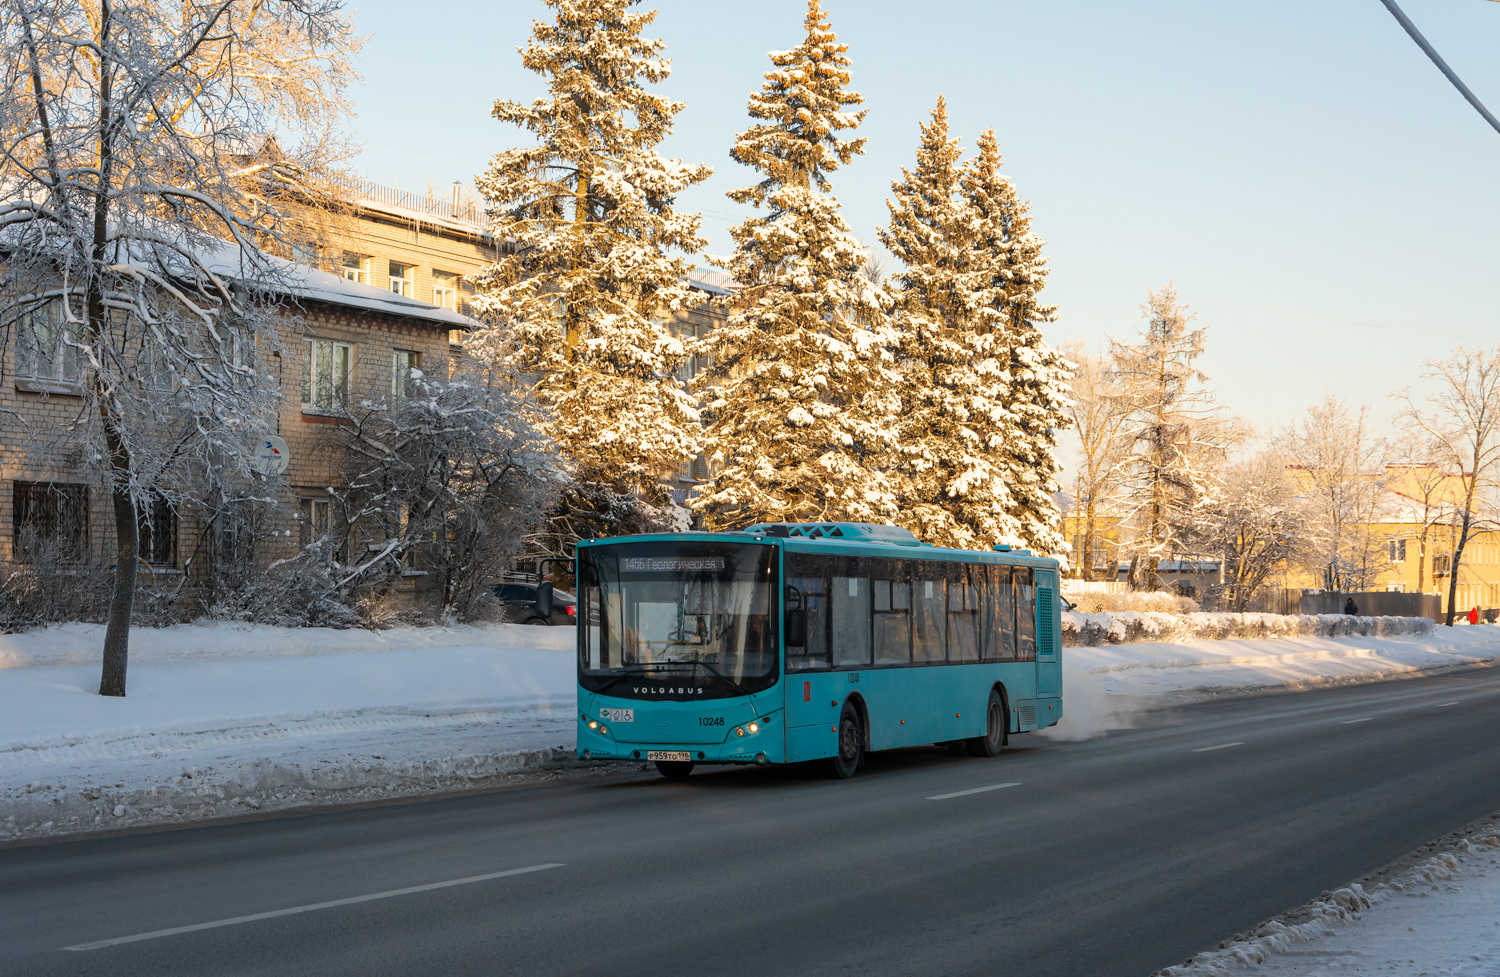 Saint Petersburg, Volgabus-5270.G4 (LNG) No. 10248